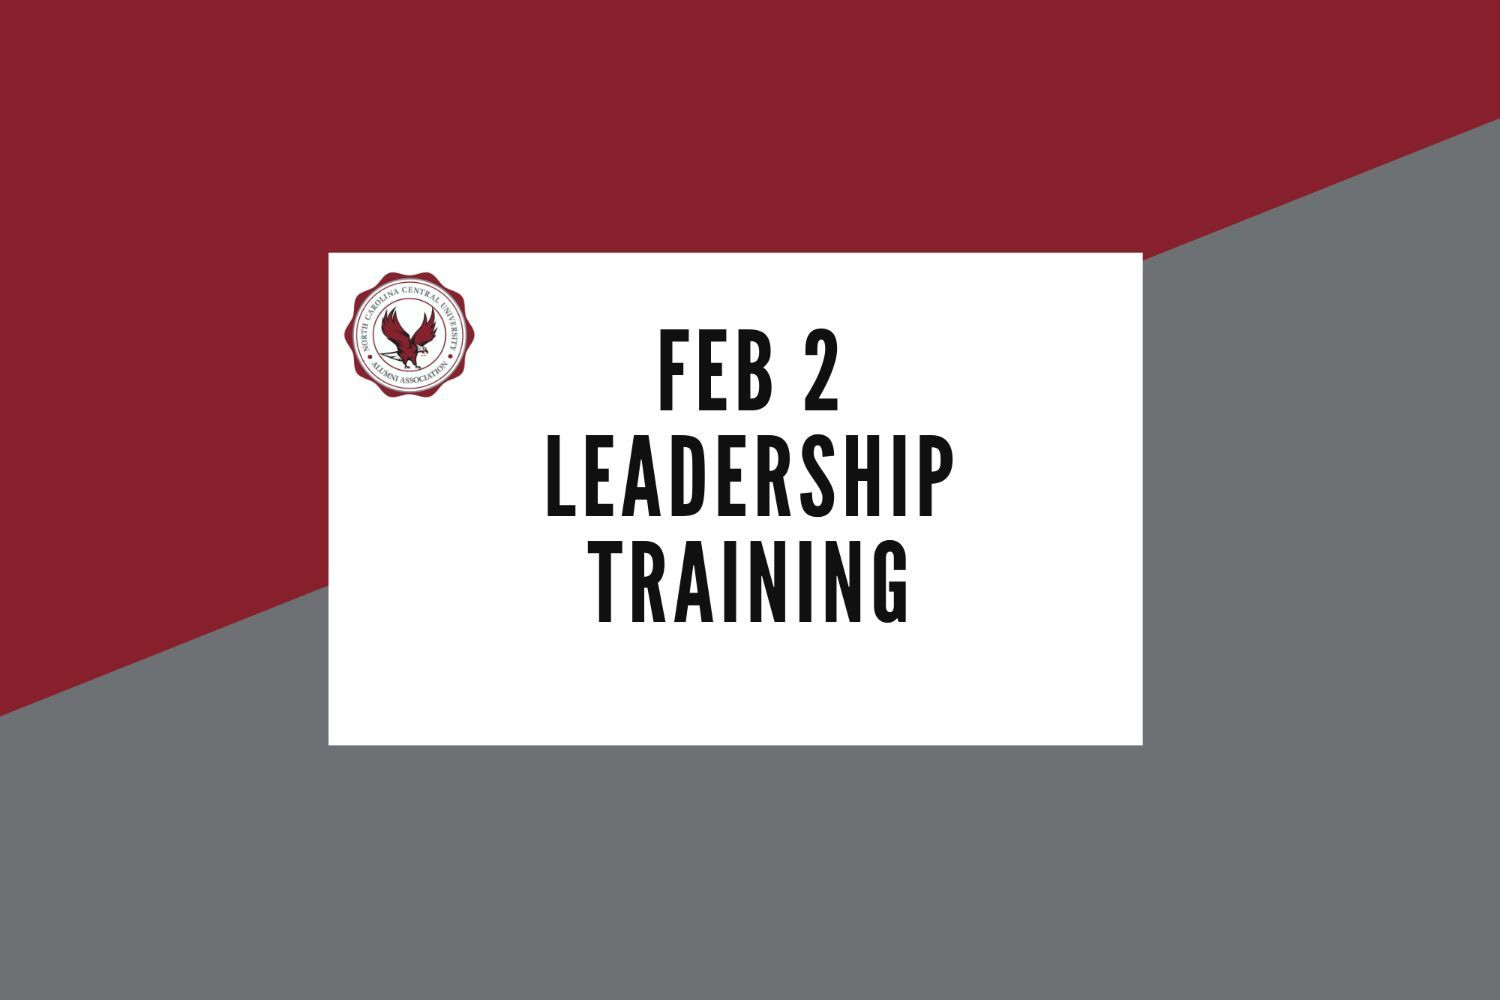 February Leadership Training